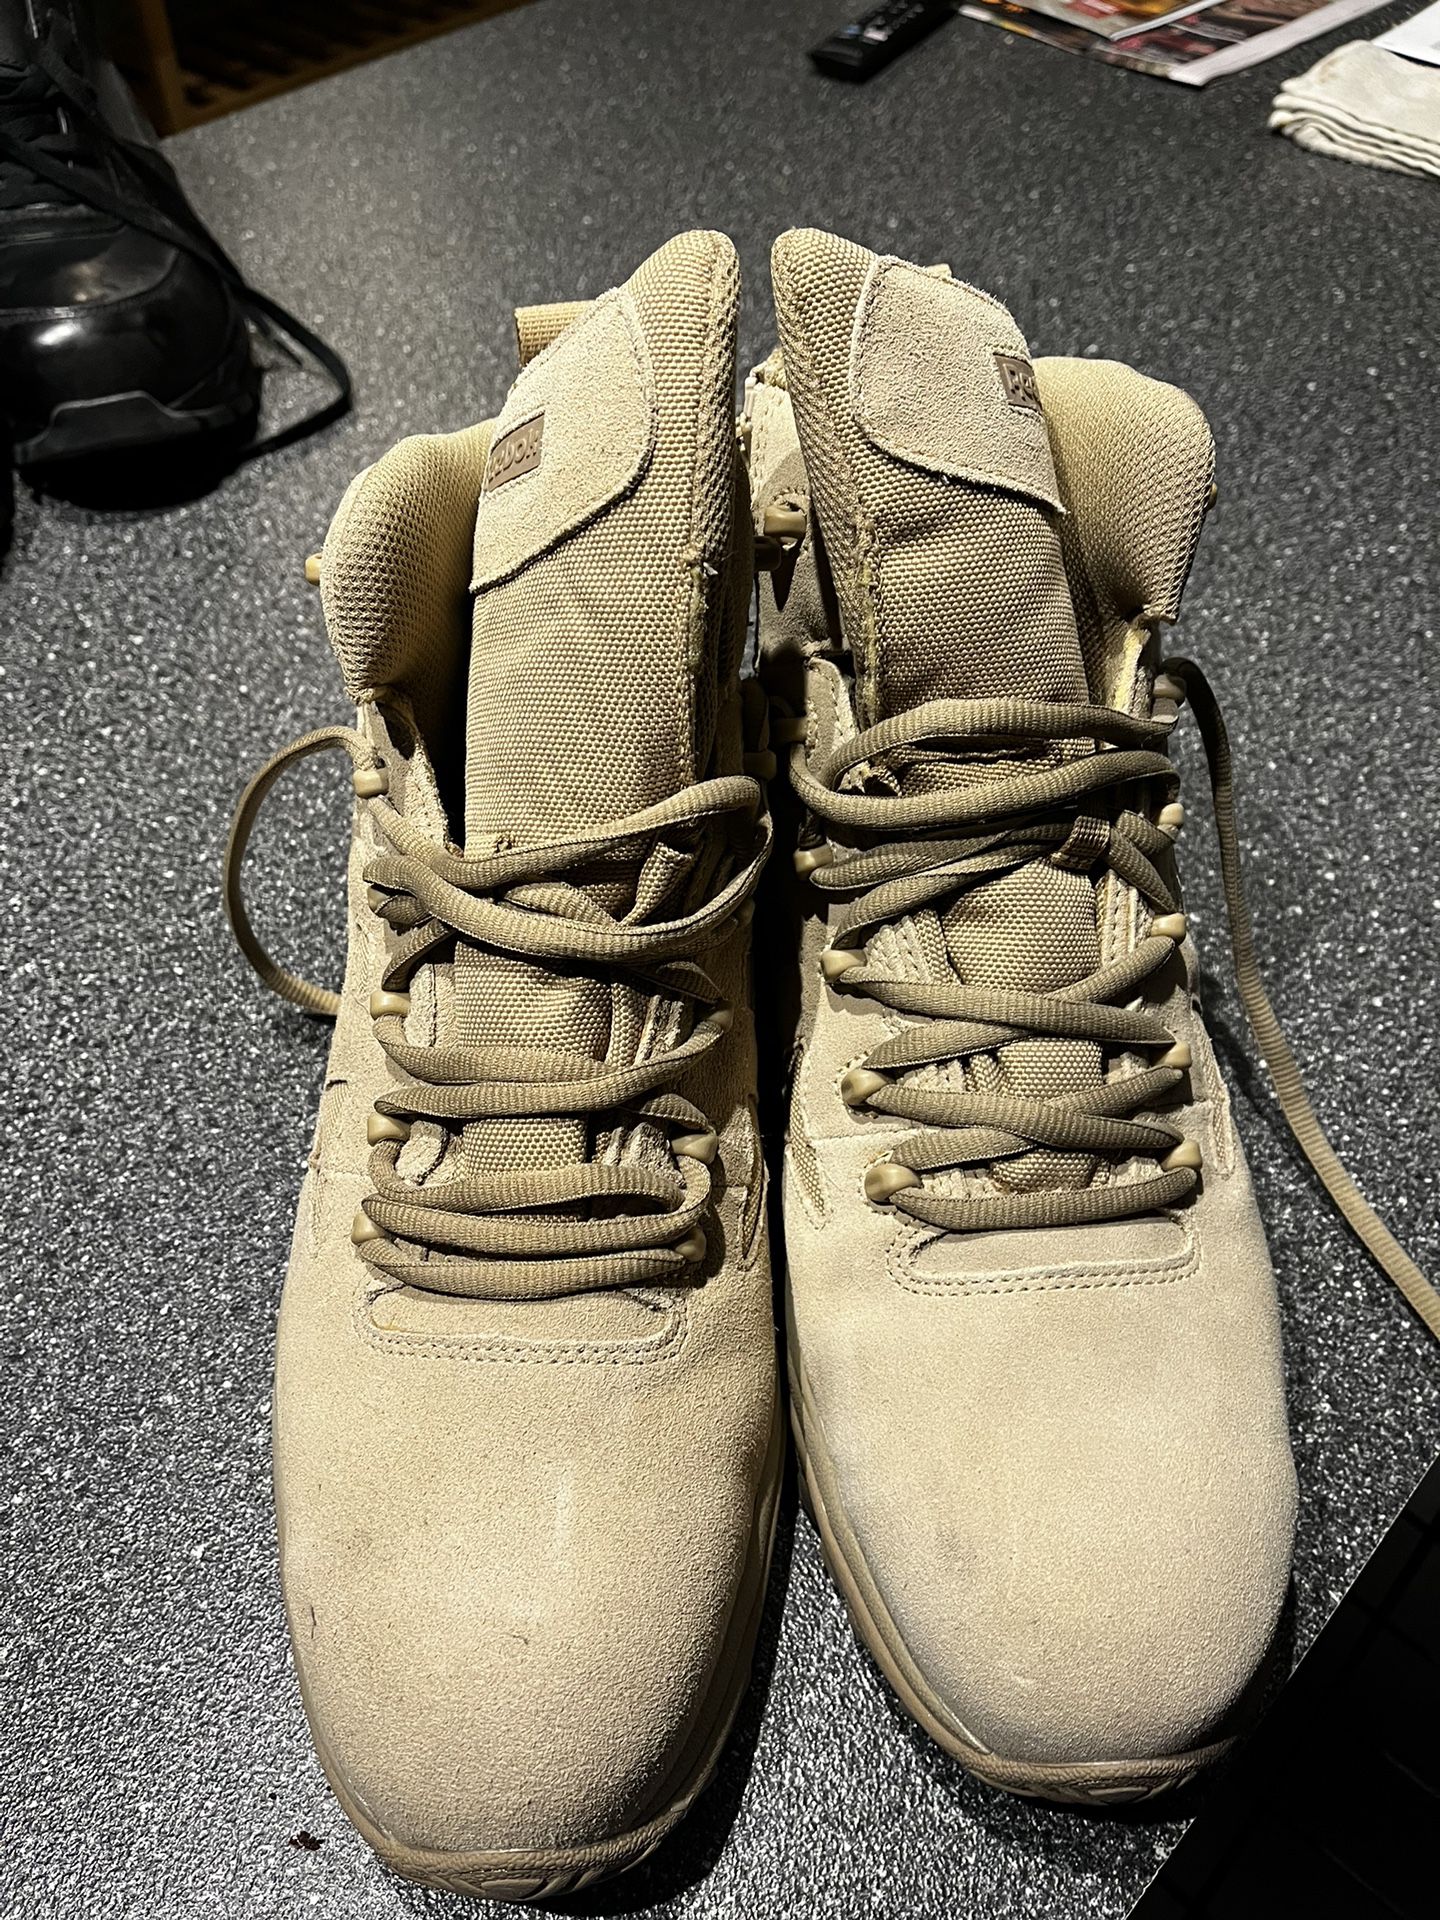 Reebok Composite Toe Boots